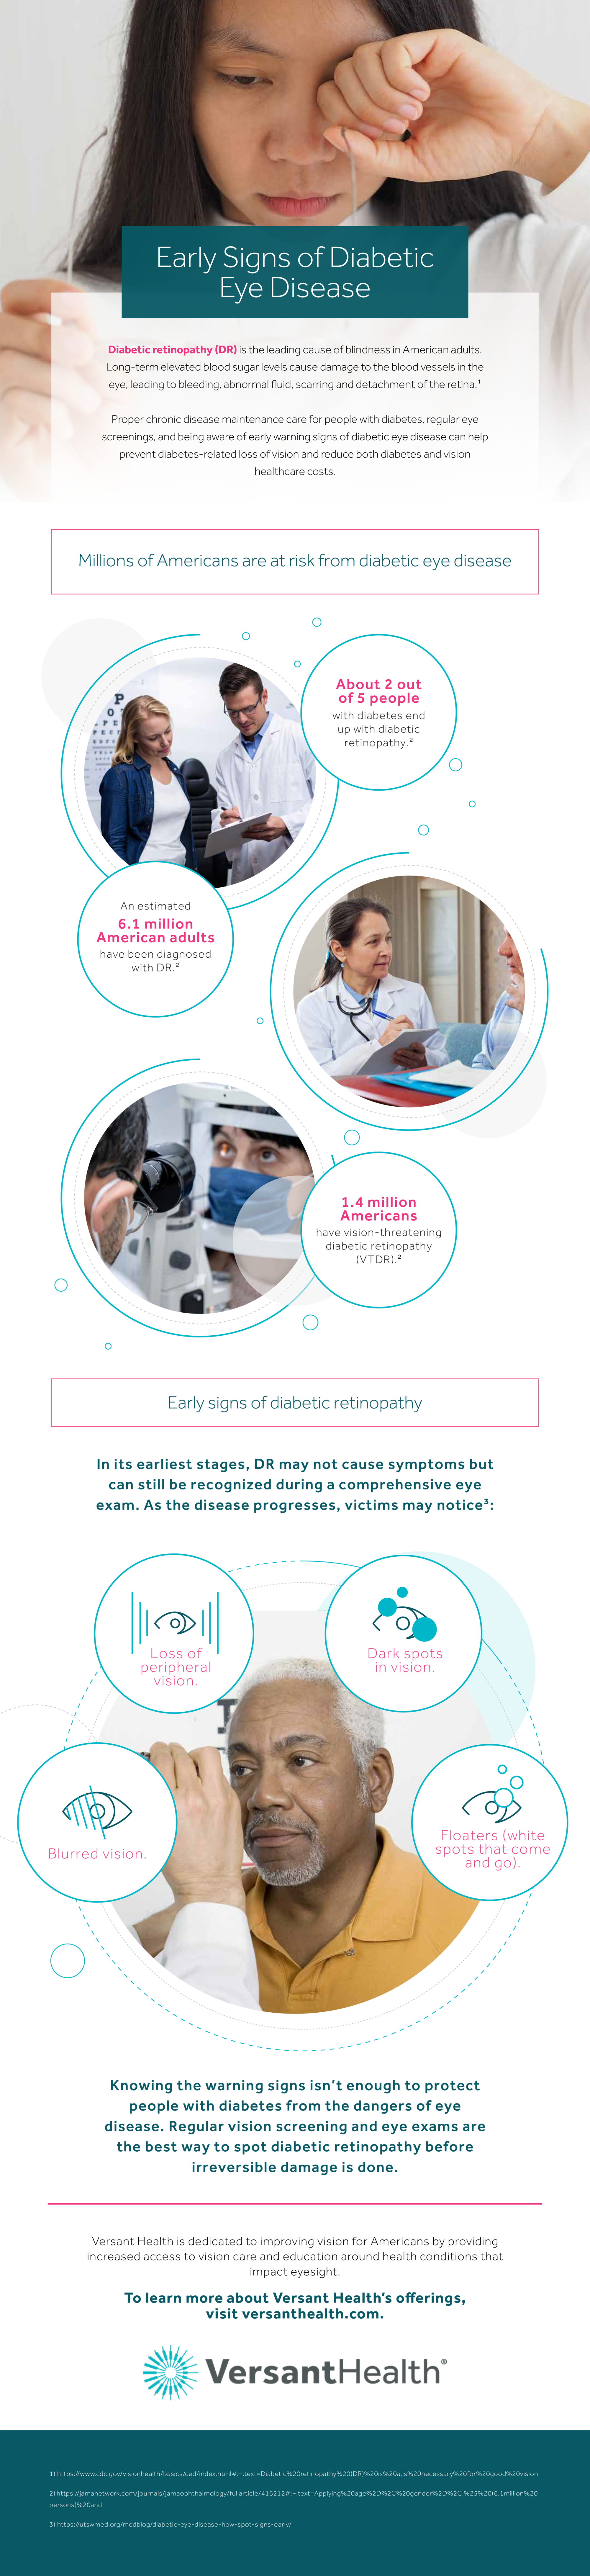 early signs of diabetic eye disease infographic